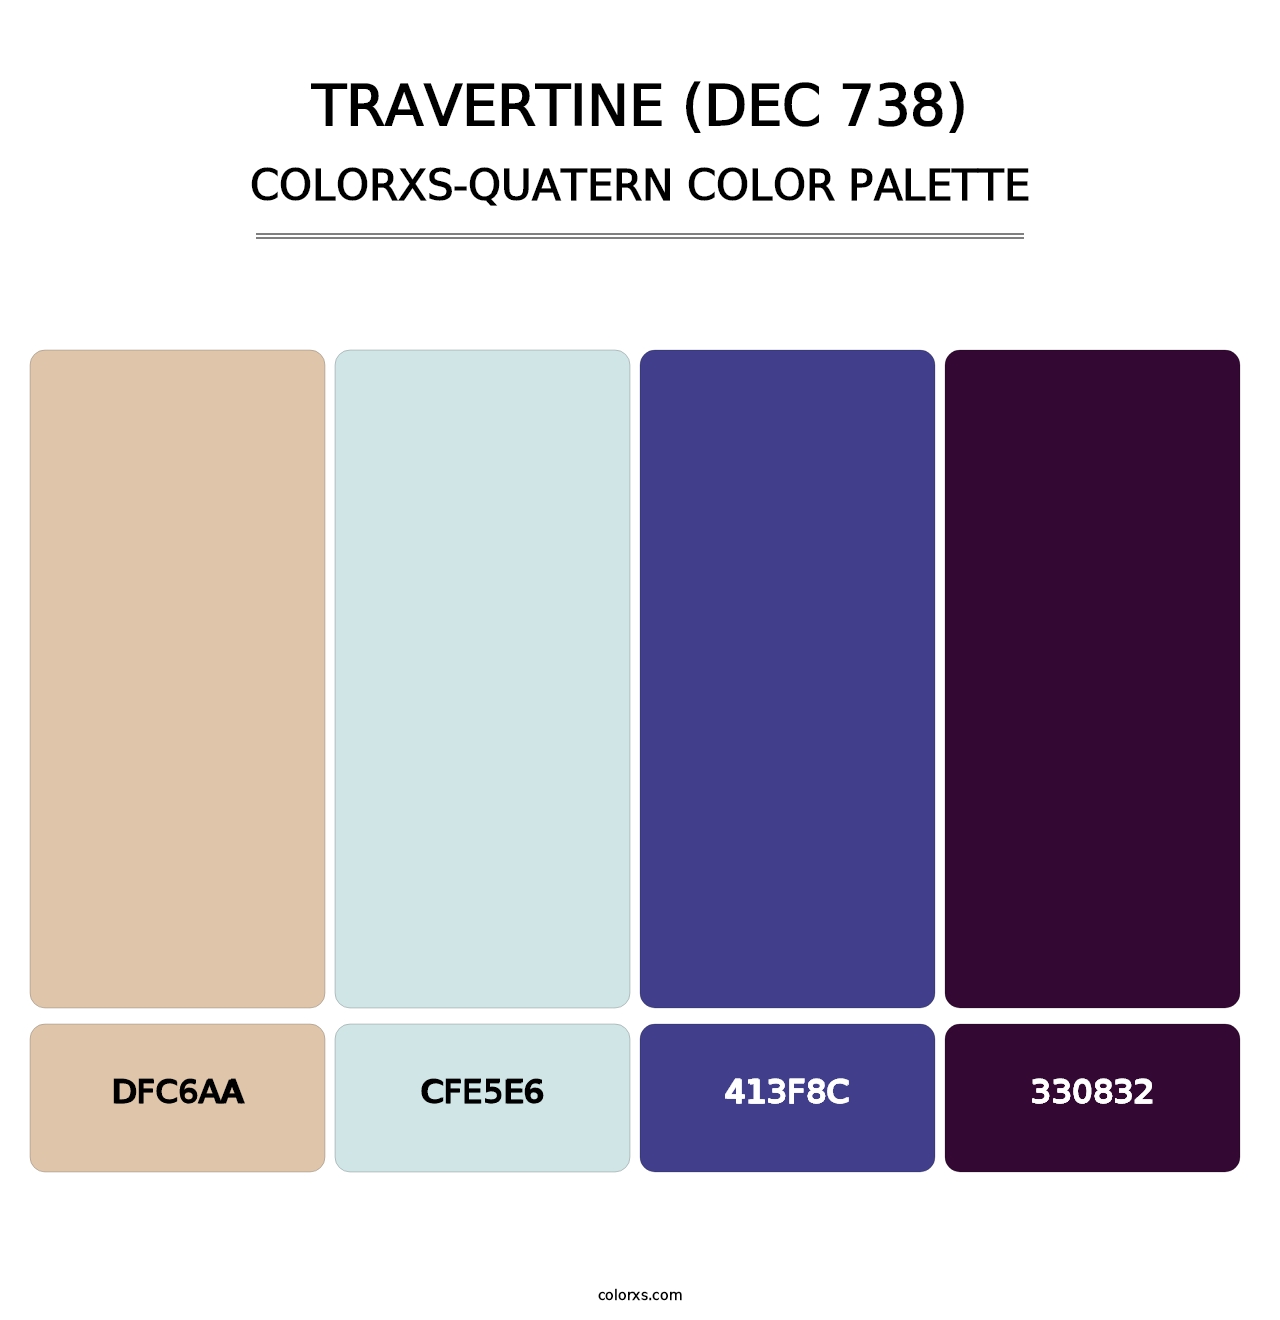 Travertine (DEC 738) - Colorxs Quatern Palette